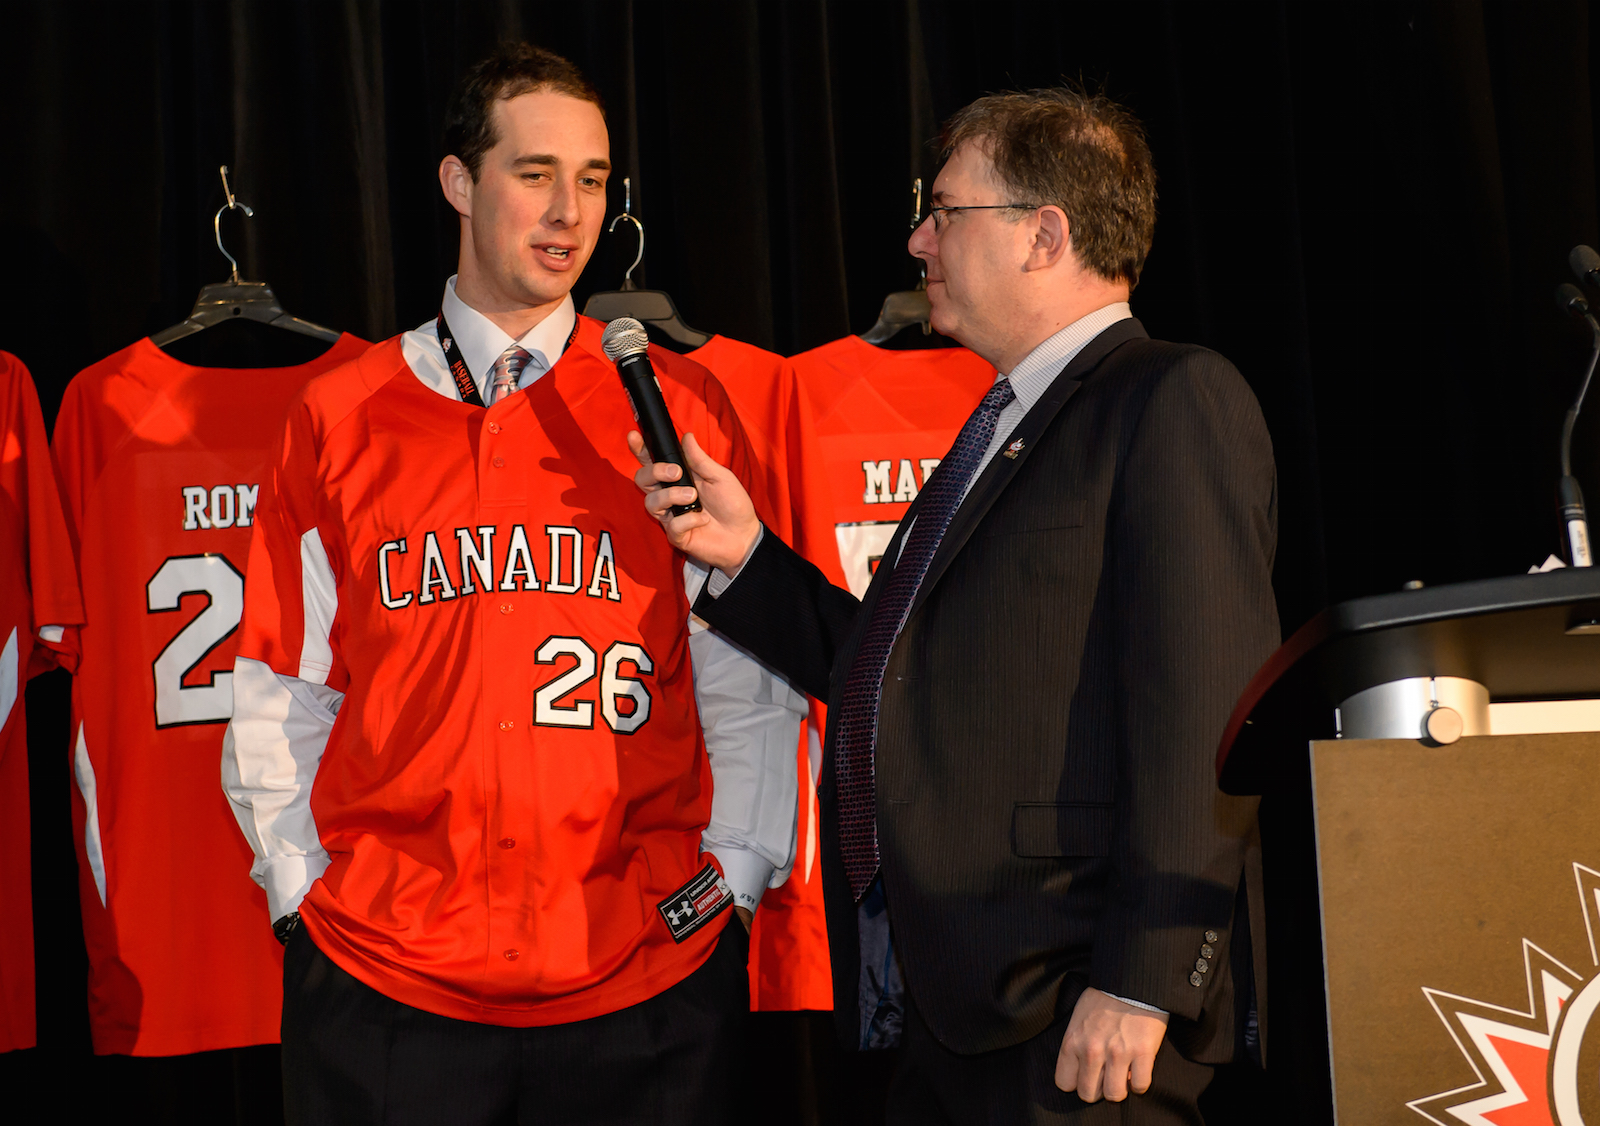 Baseball Canada National Teams program set to host Awards Banquet and Fundraiser